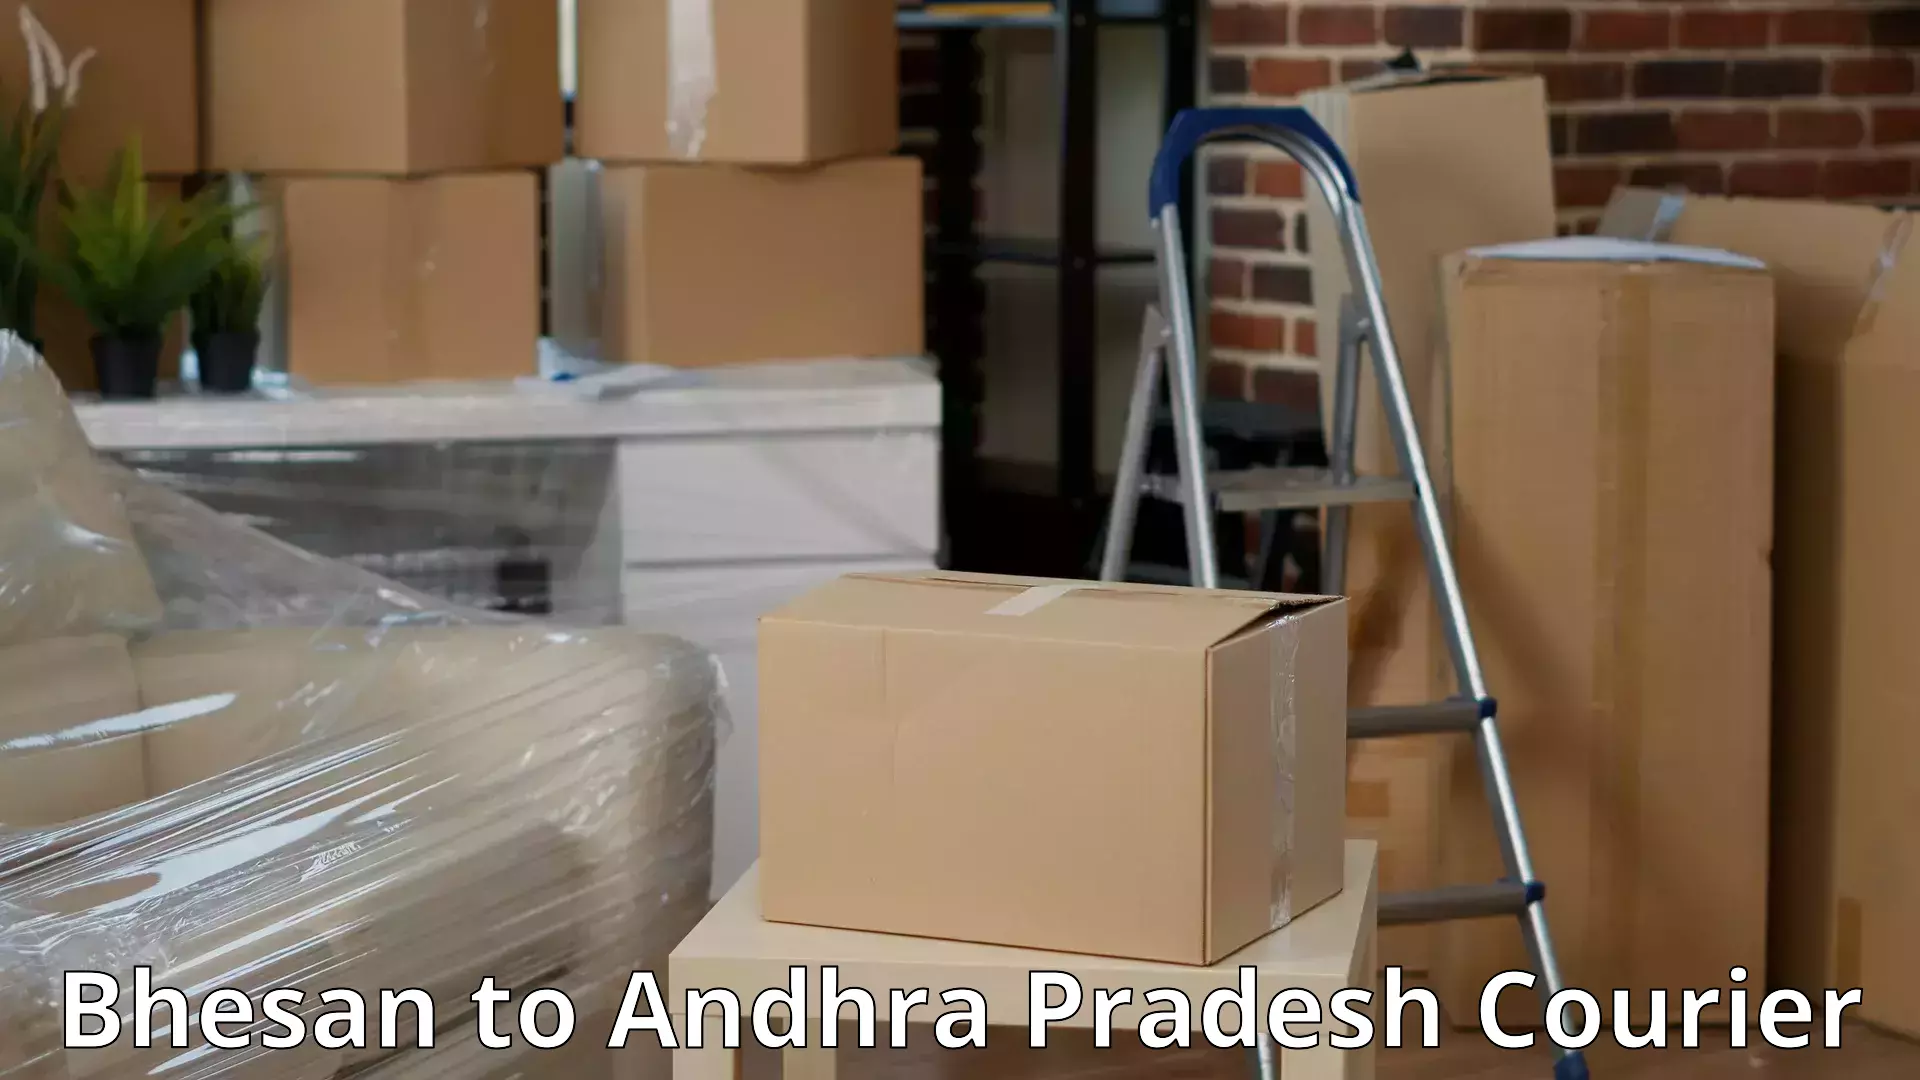 Expert packing and moving in Bhesan to Andhra Pradesh